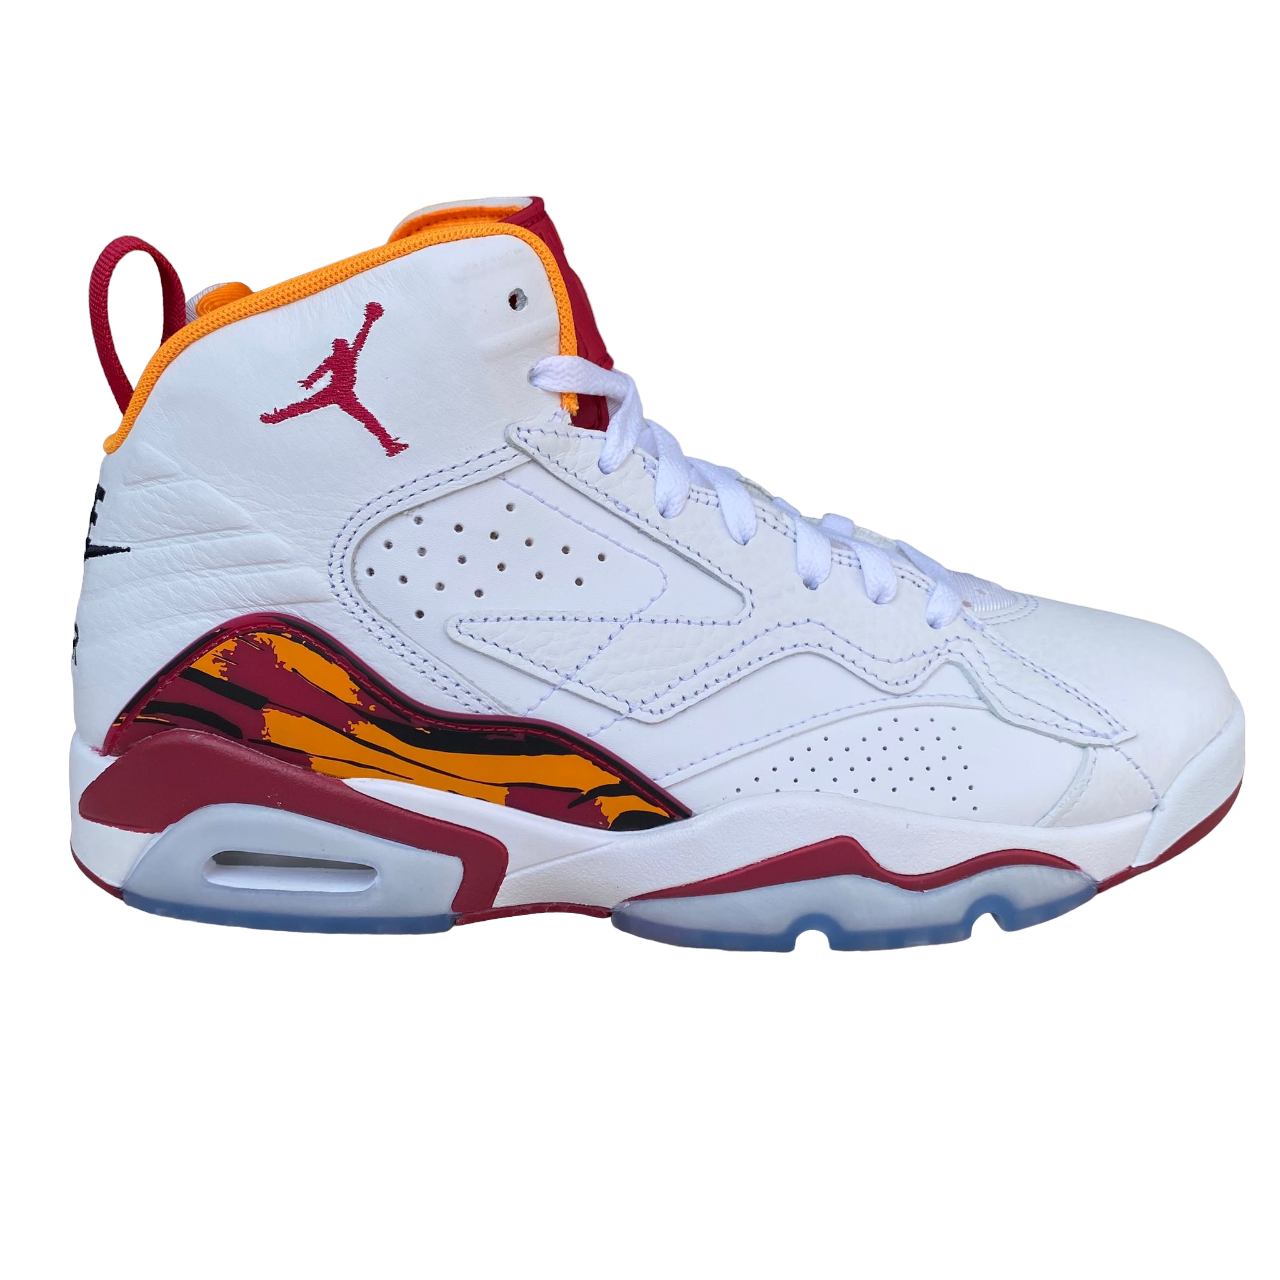 Jordan scarpa sneakers da uomo alta in pelle DZ4475-168 bianco-rosso cordinale